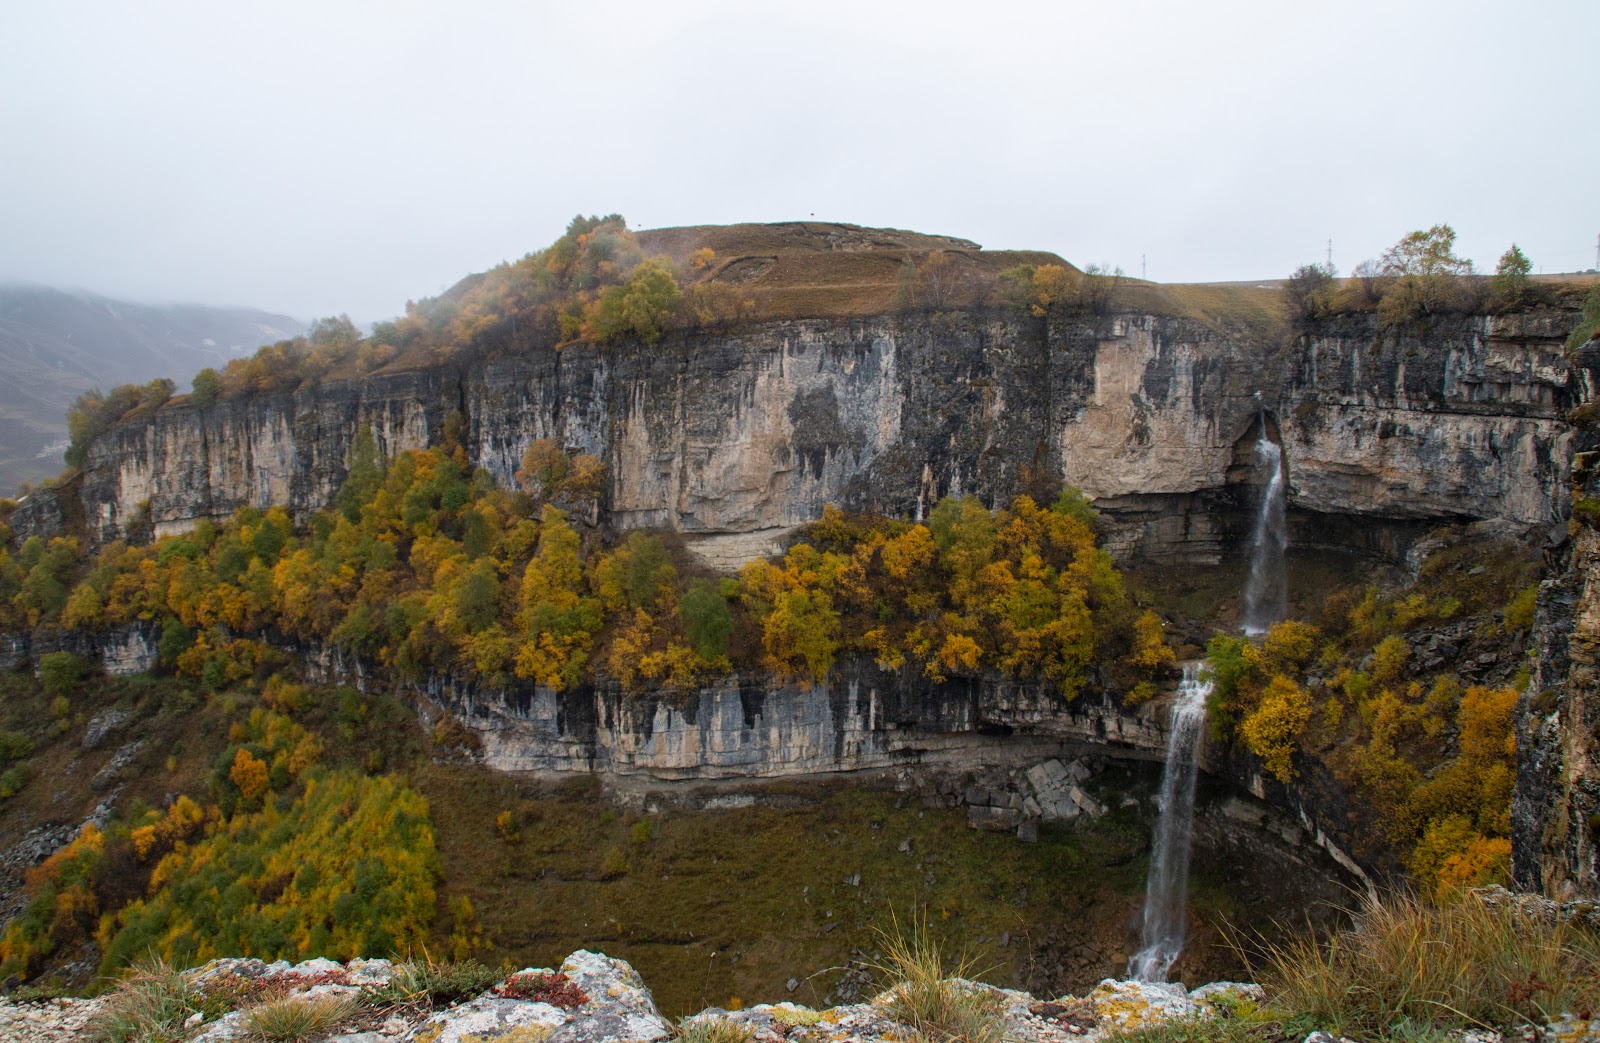 Vodopad "Khanskiy" V M. Matlas